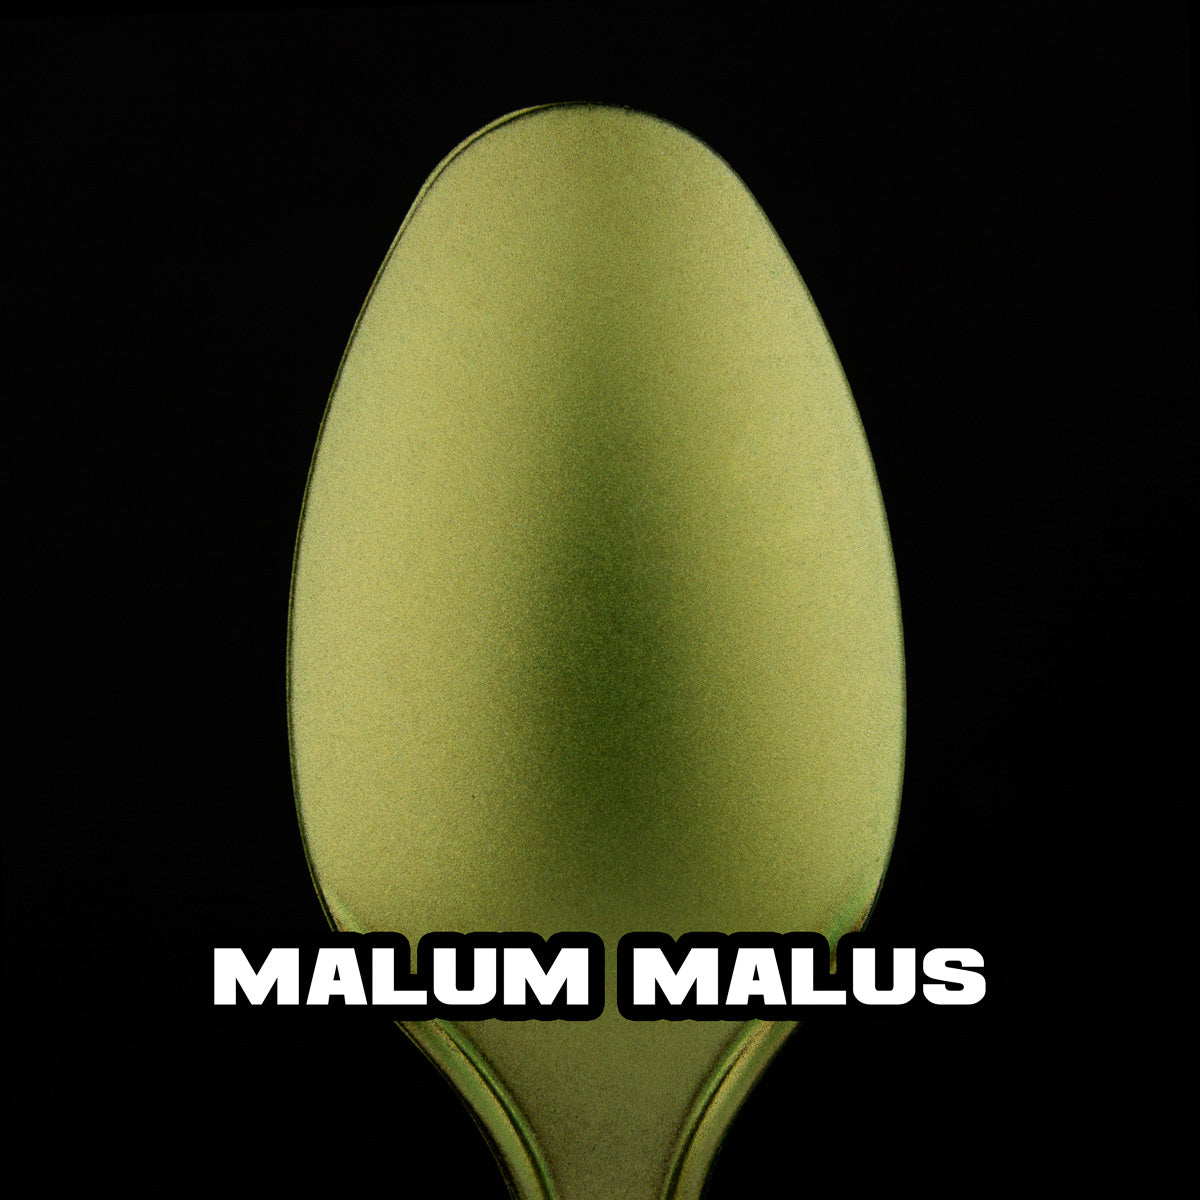 spoon with yellowish green metallic paint (Malum Malus)